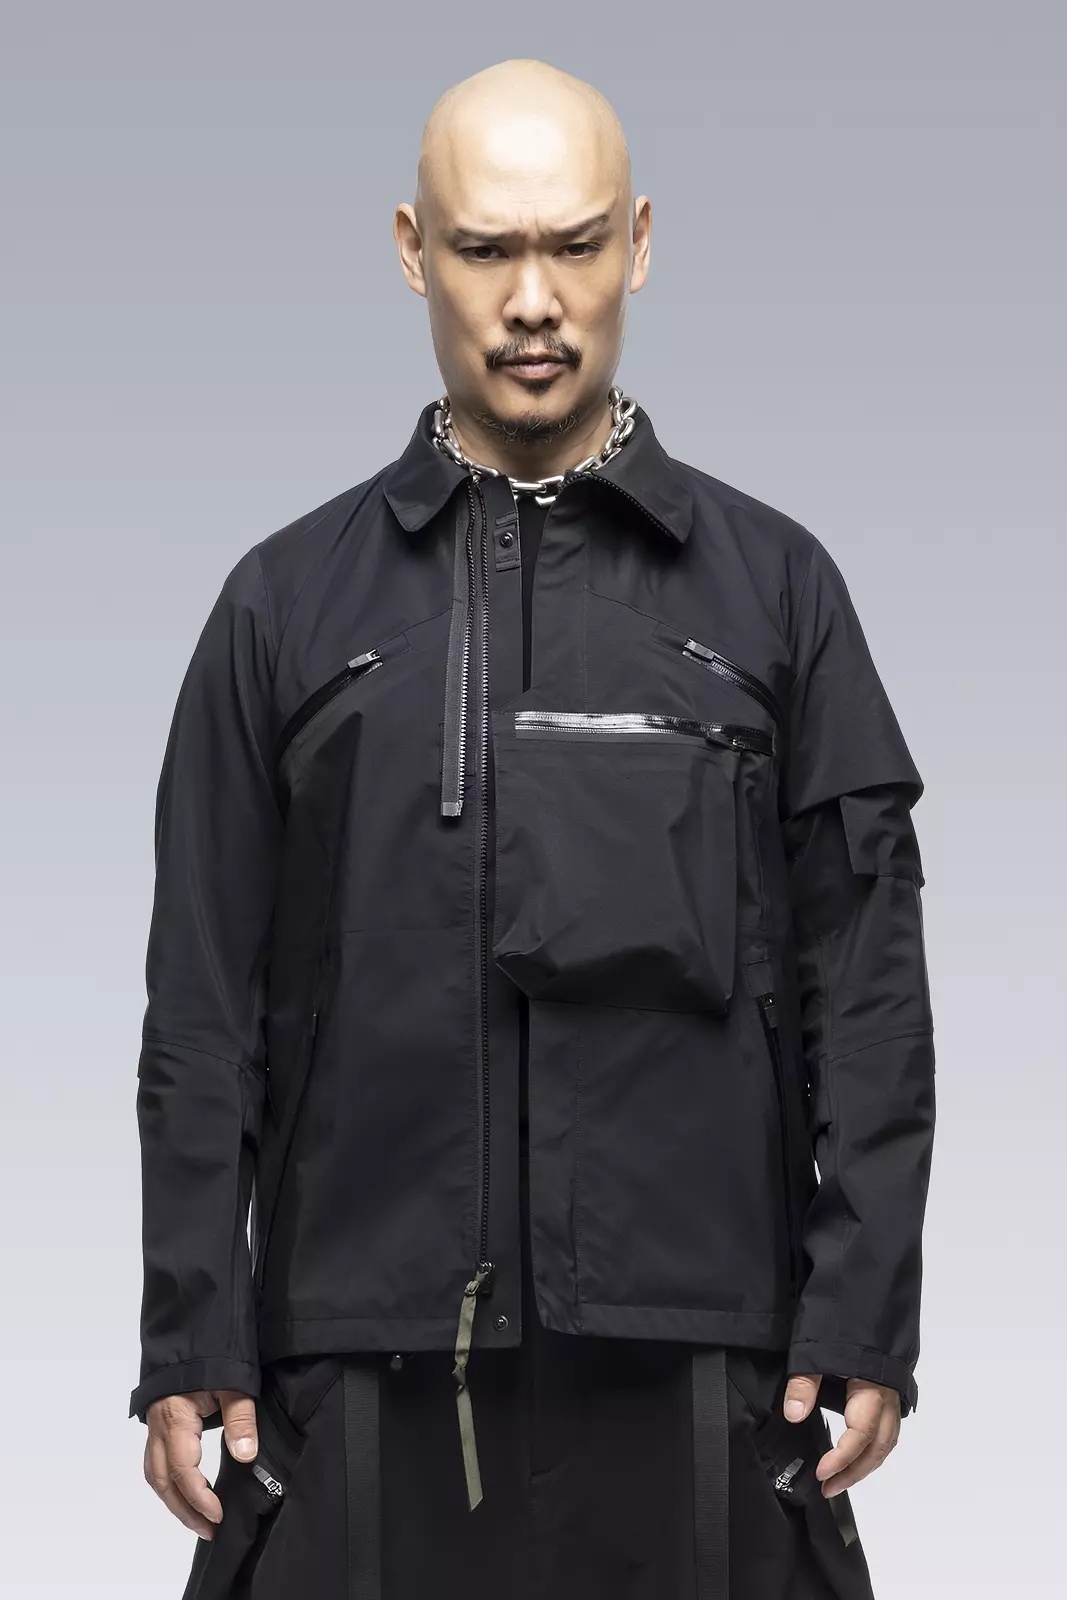 J1A-GTKR-BKS KR EX 3L Gore-Tex® Pro Interops Jacket Black with size 5 WR zippers in gloss black - 9